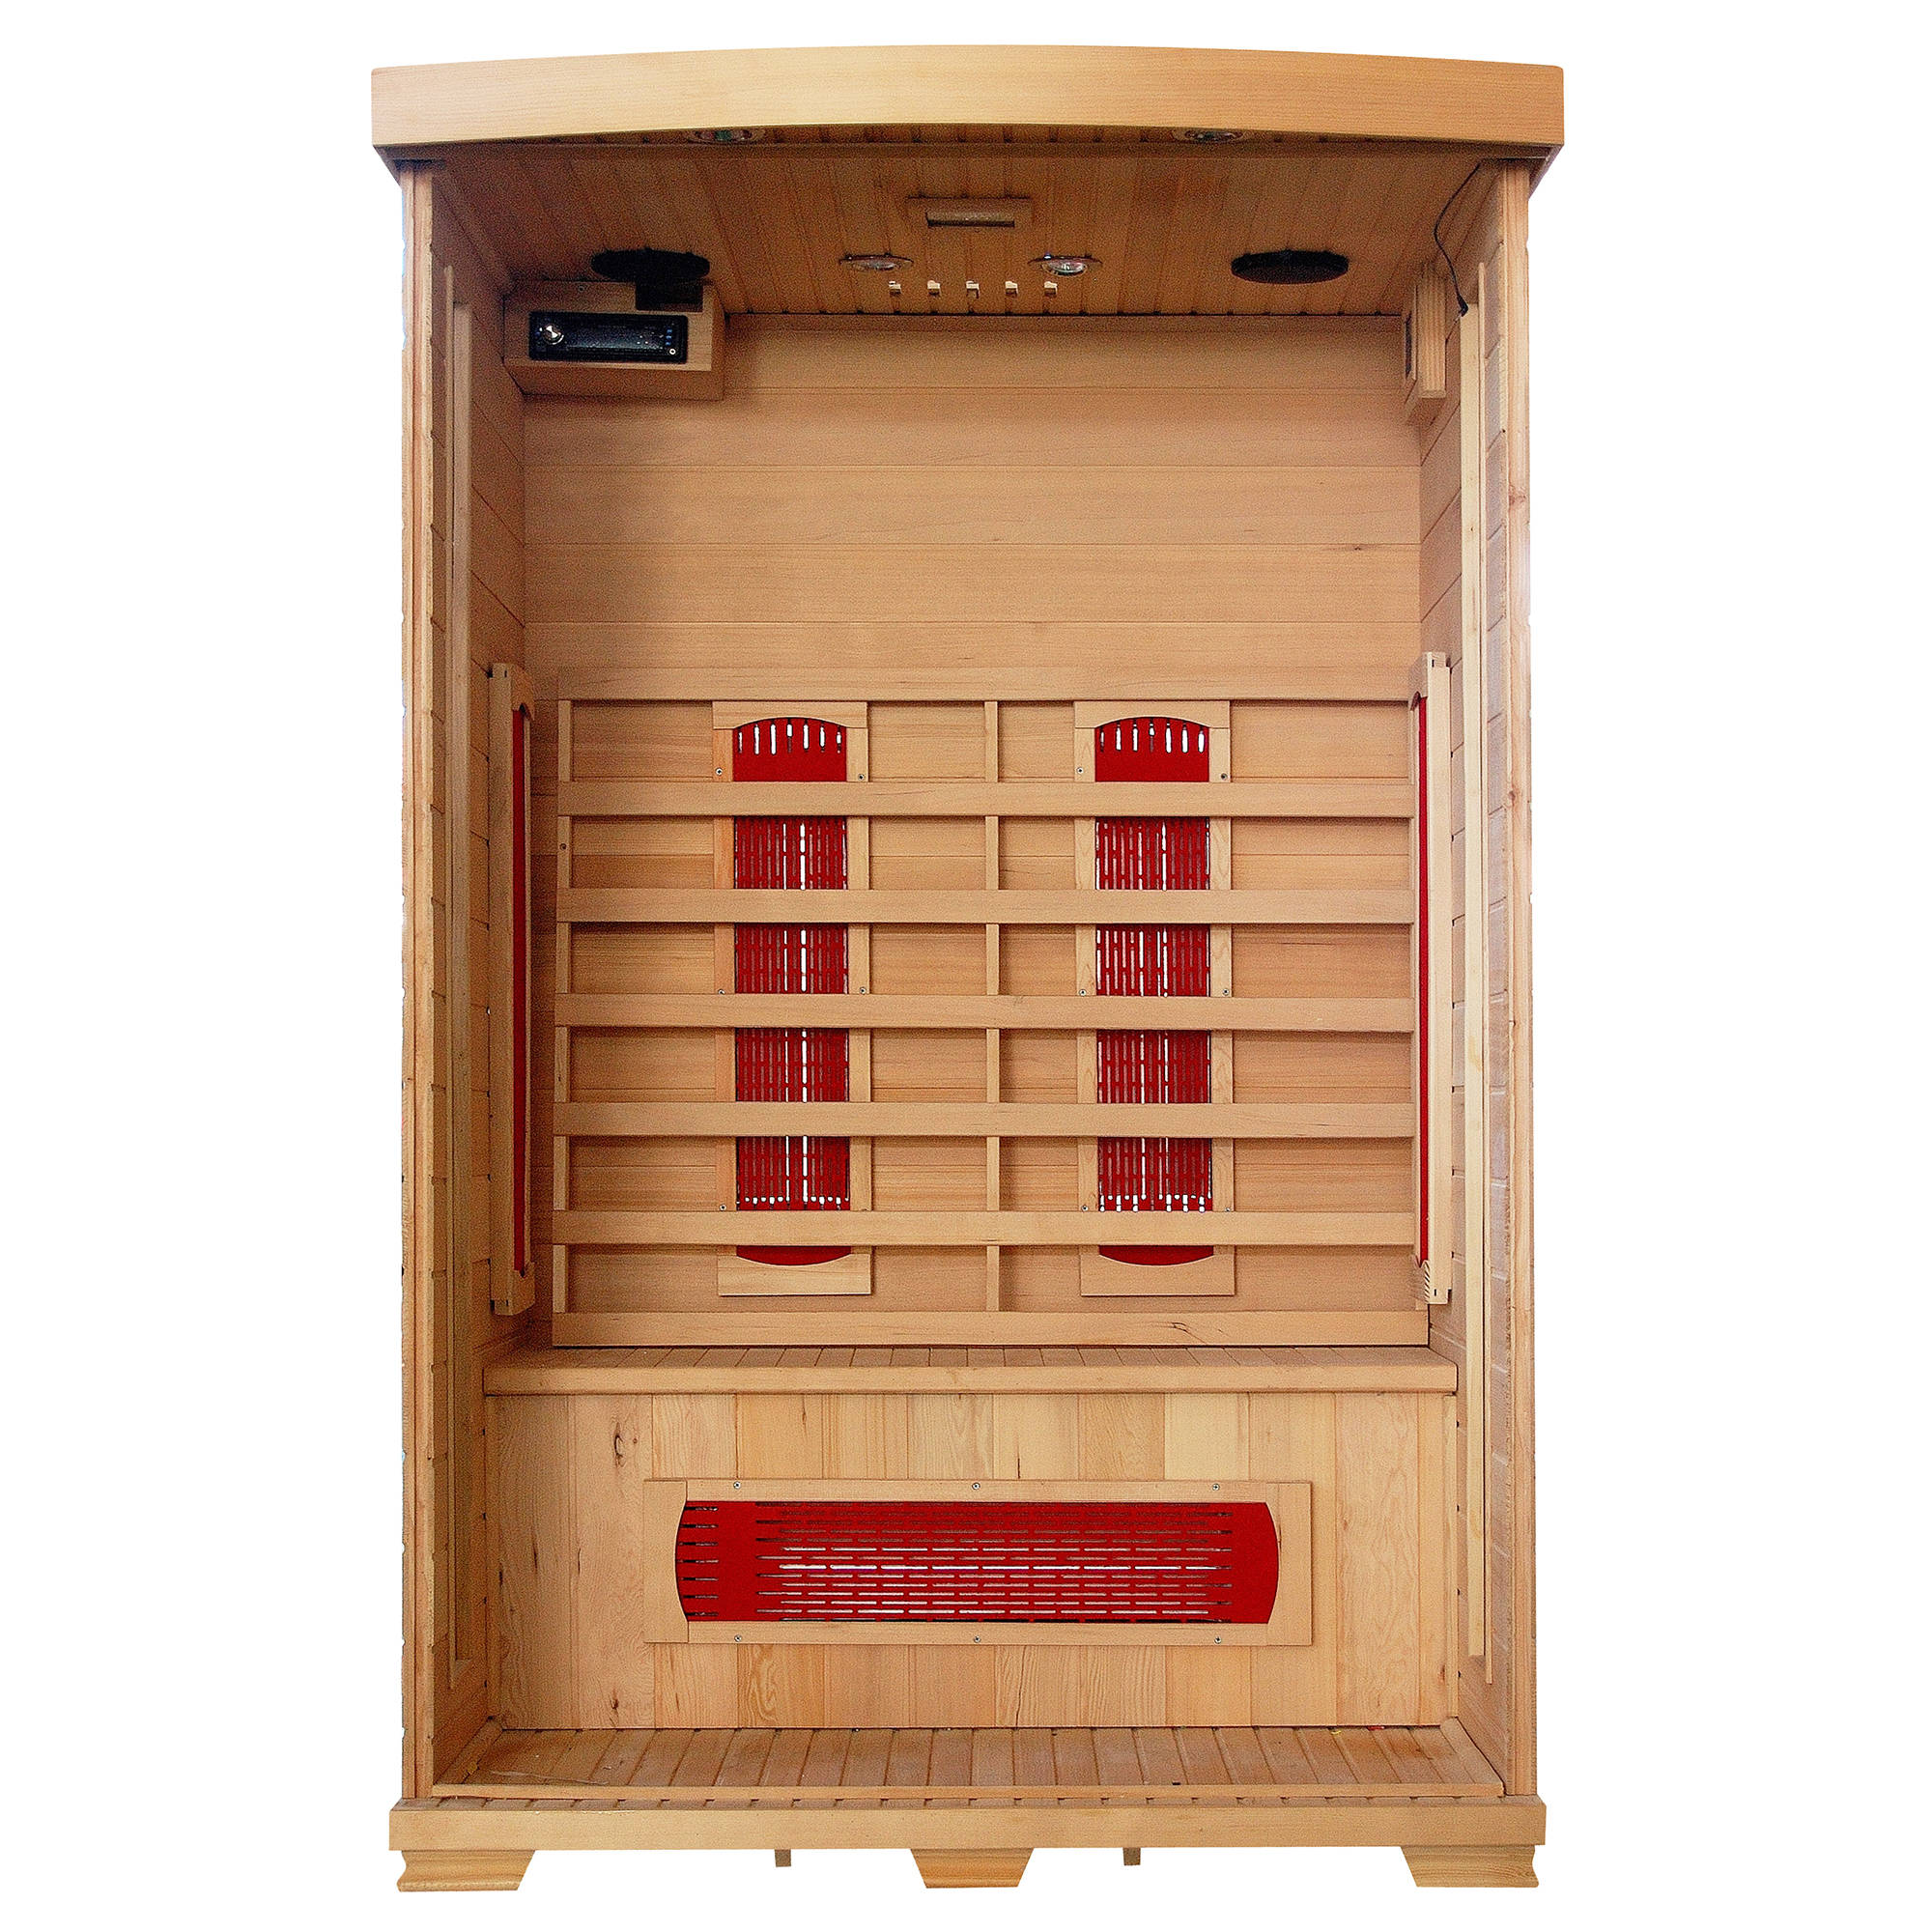 Coronado - 2 Person Ceramic Heater Heatwave Infrared Home Sauna - SA2406